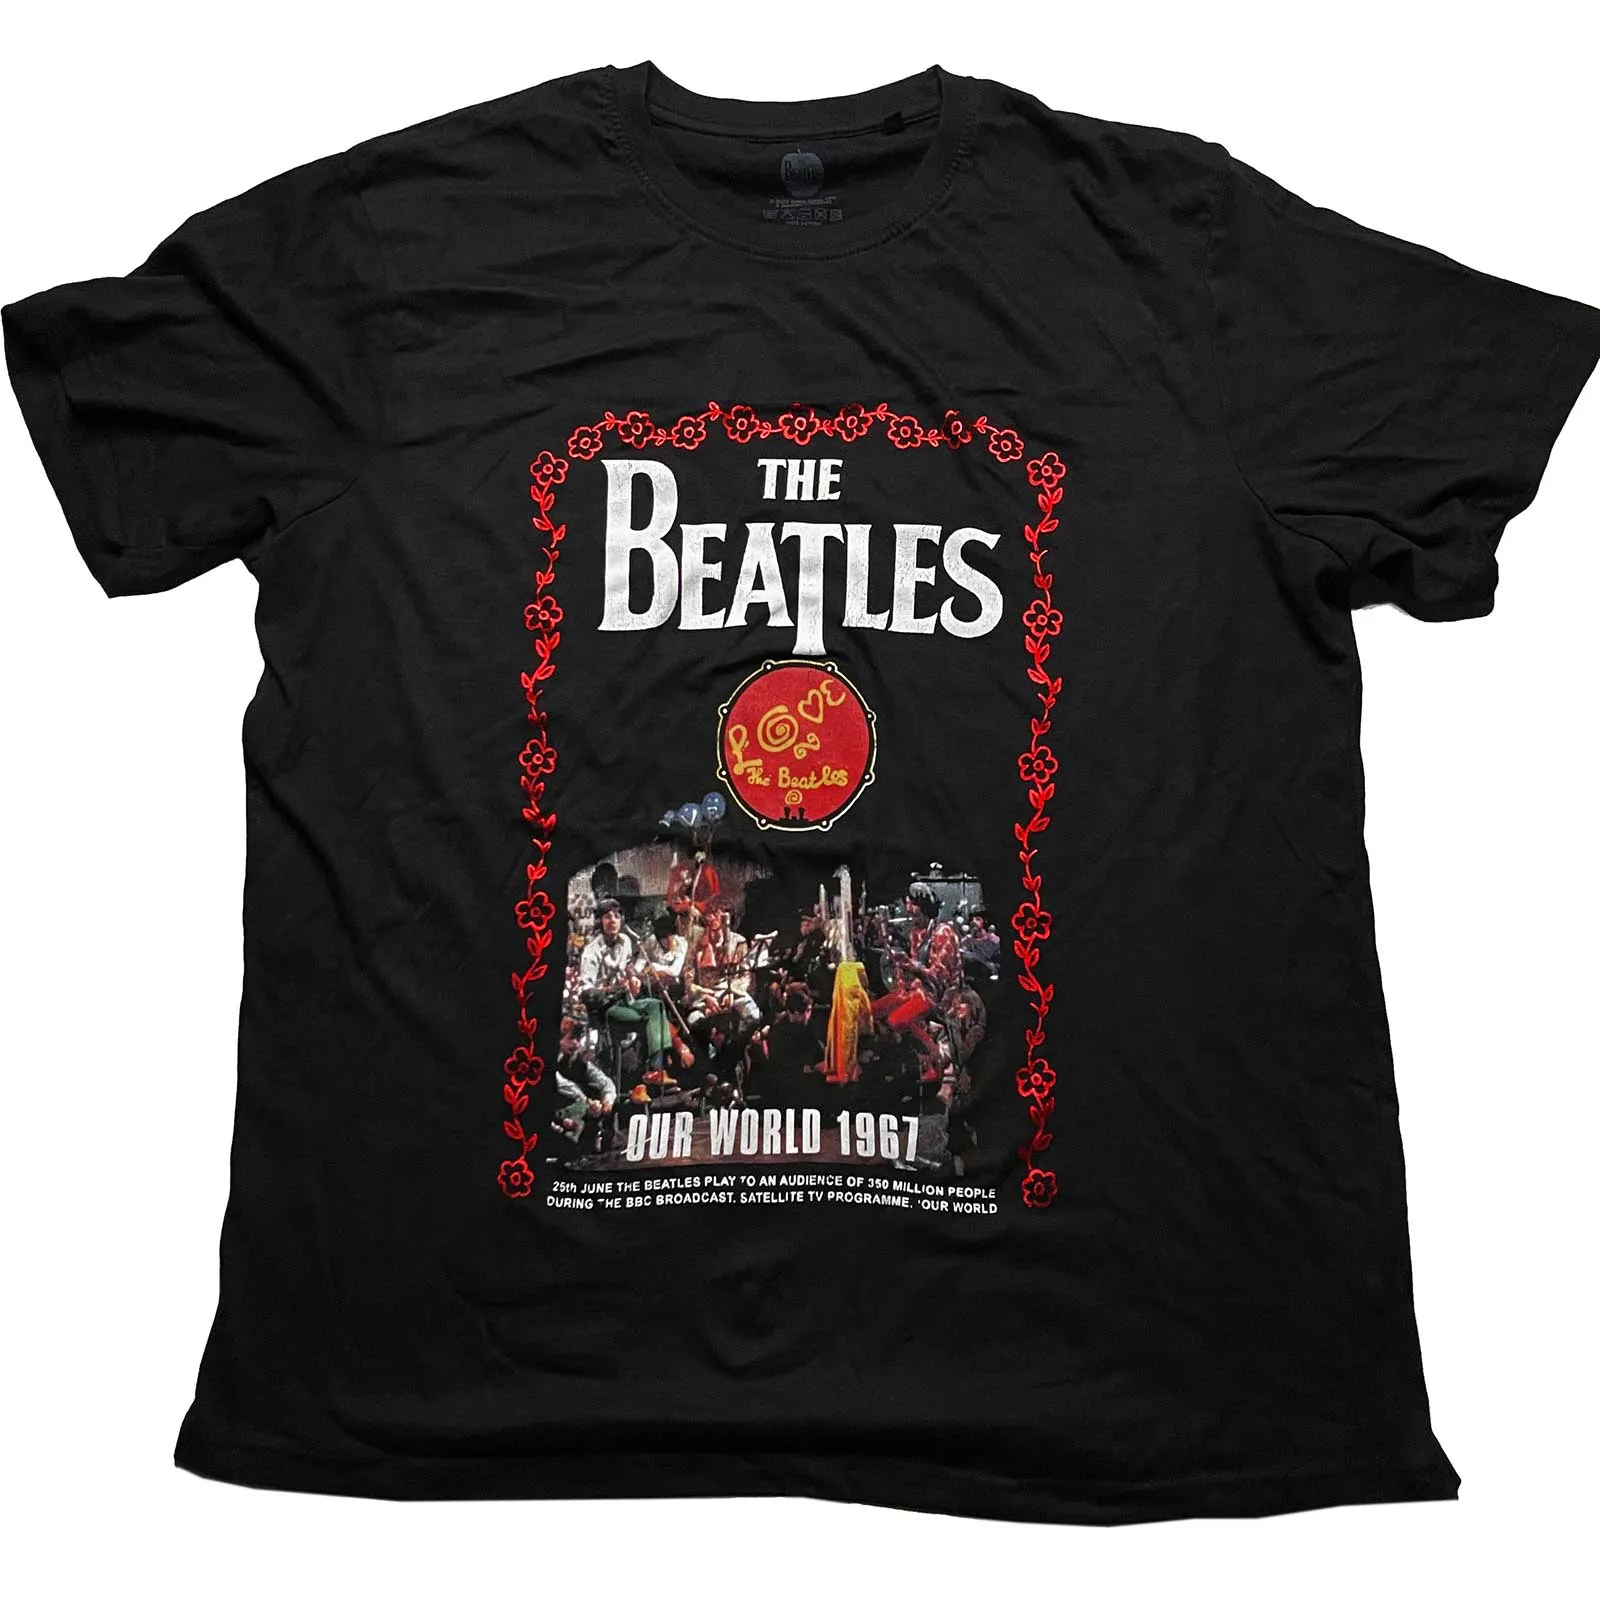 The Beatles - Unisex T-Shirt Our World 1967 artwork